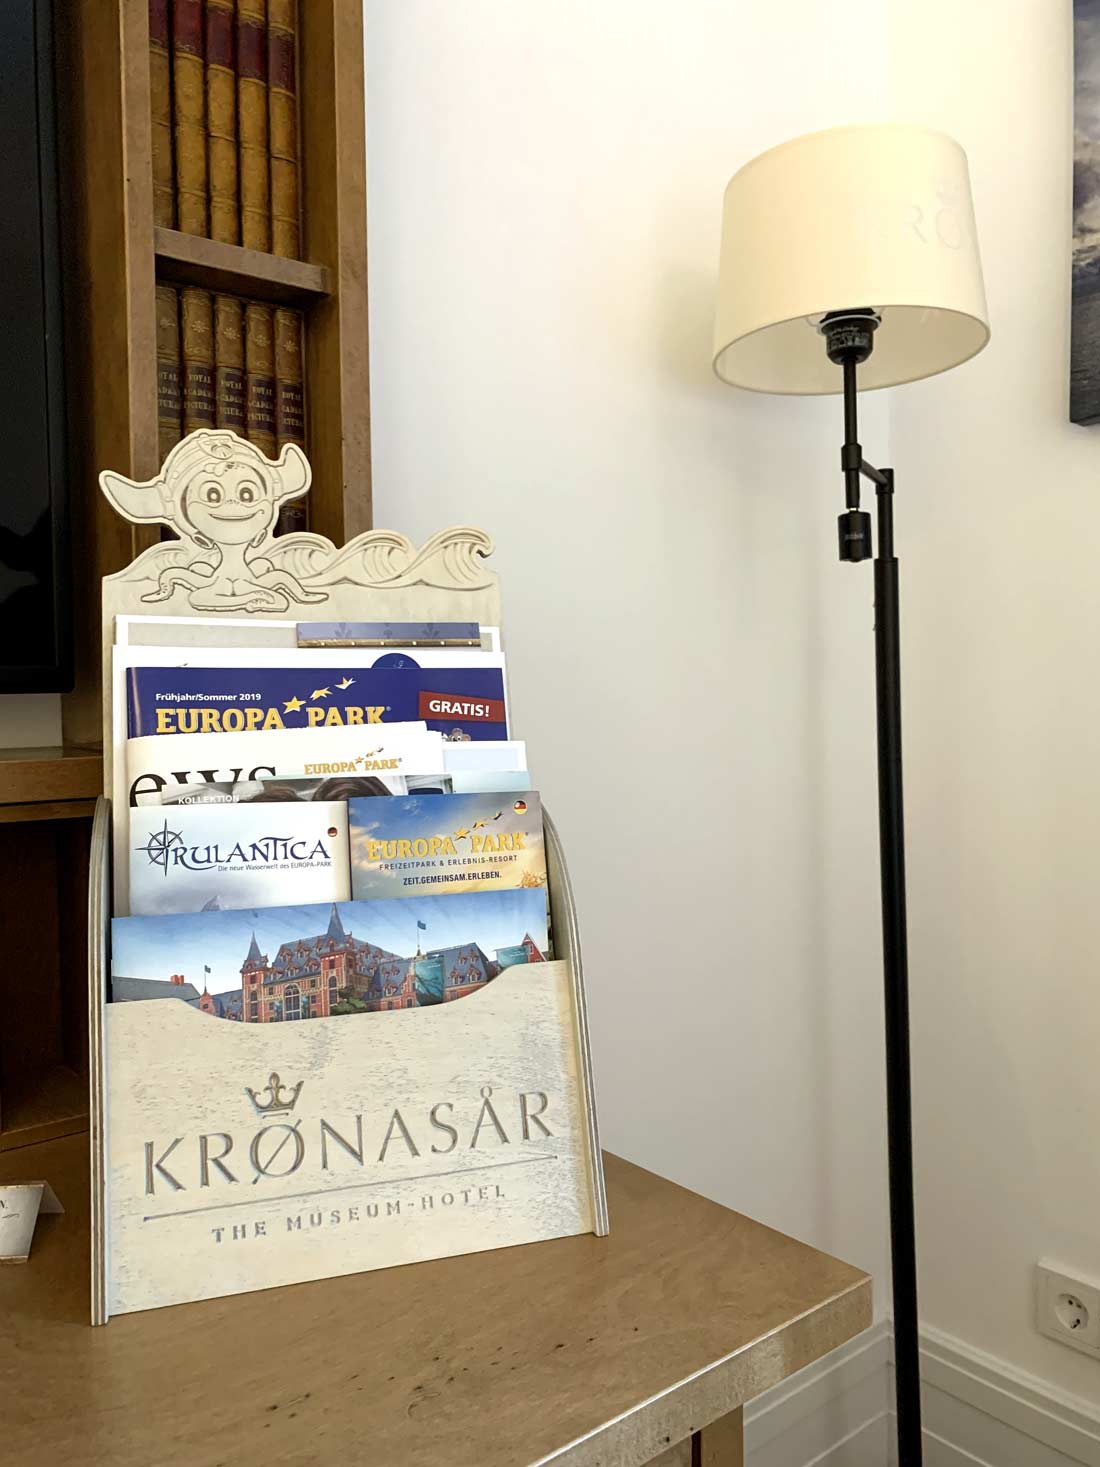 Hotel Krønasår: Standardzimmer im Landhausstil